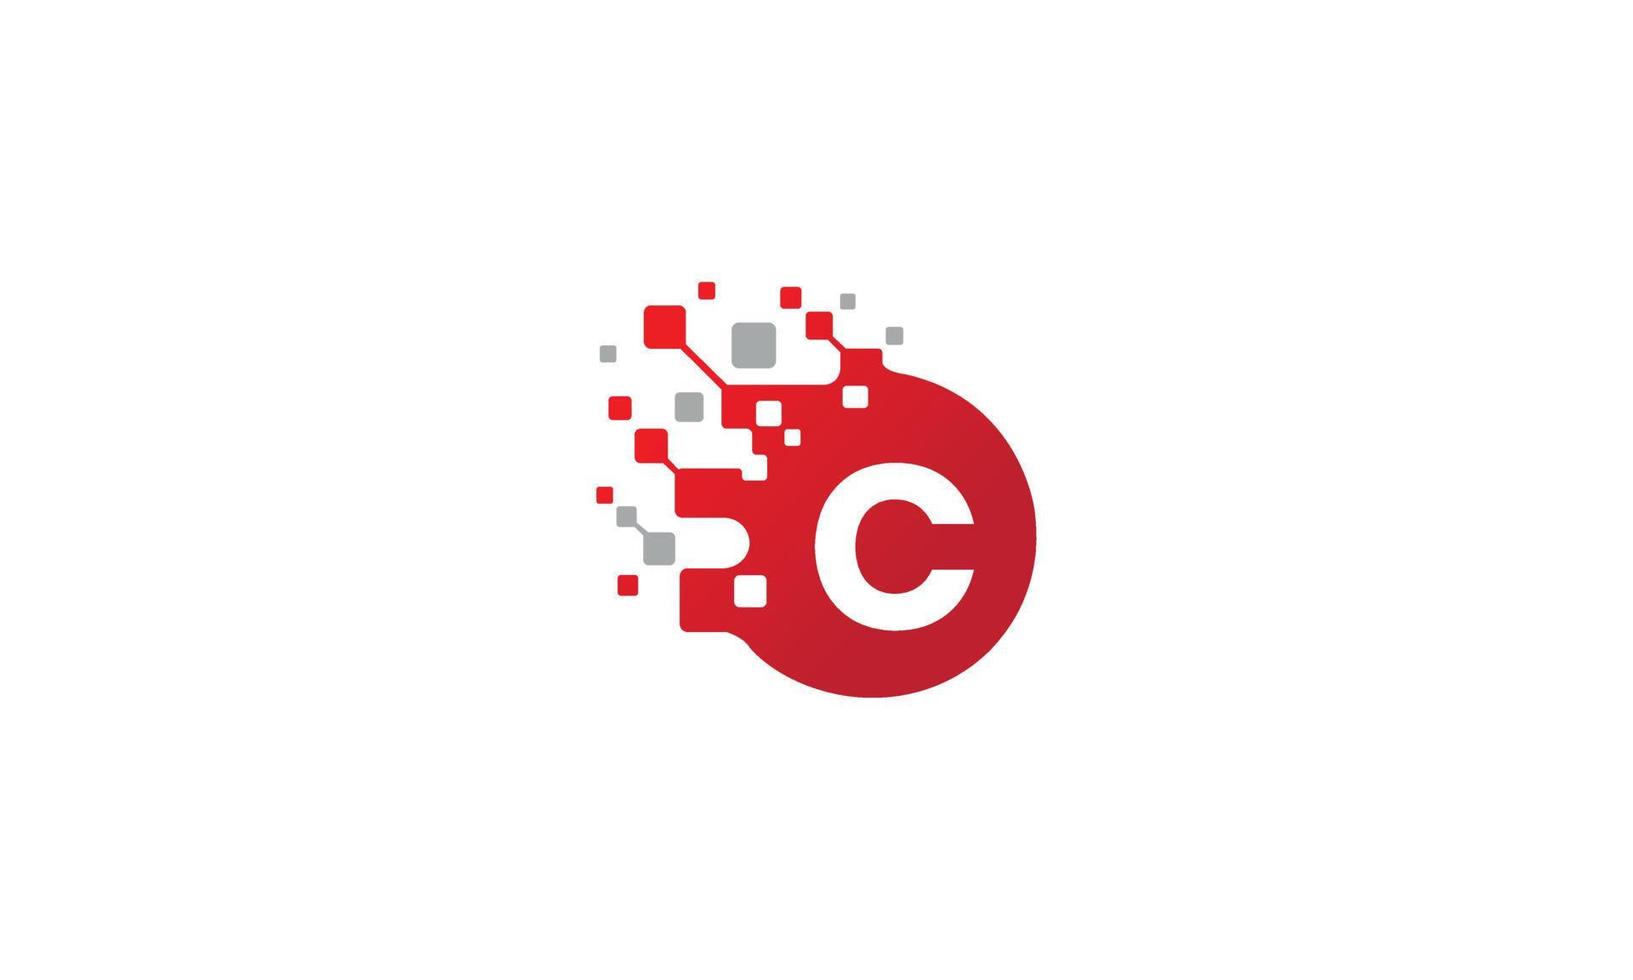 c Logo. c Brief. Initiale Brief c verknüpft Kreis und Punkt Logo. c Design. rot und grau c Brief. c Brief Logo Design. Profi Vektor